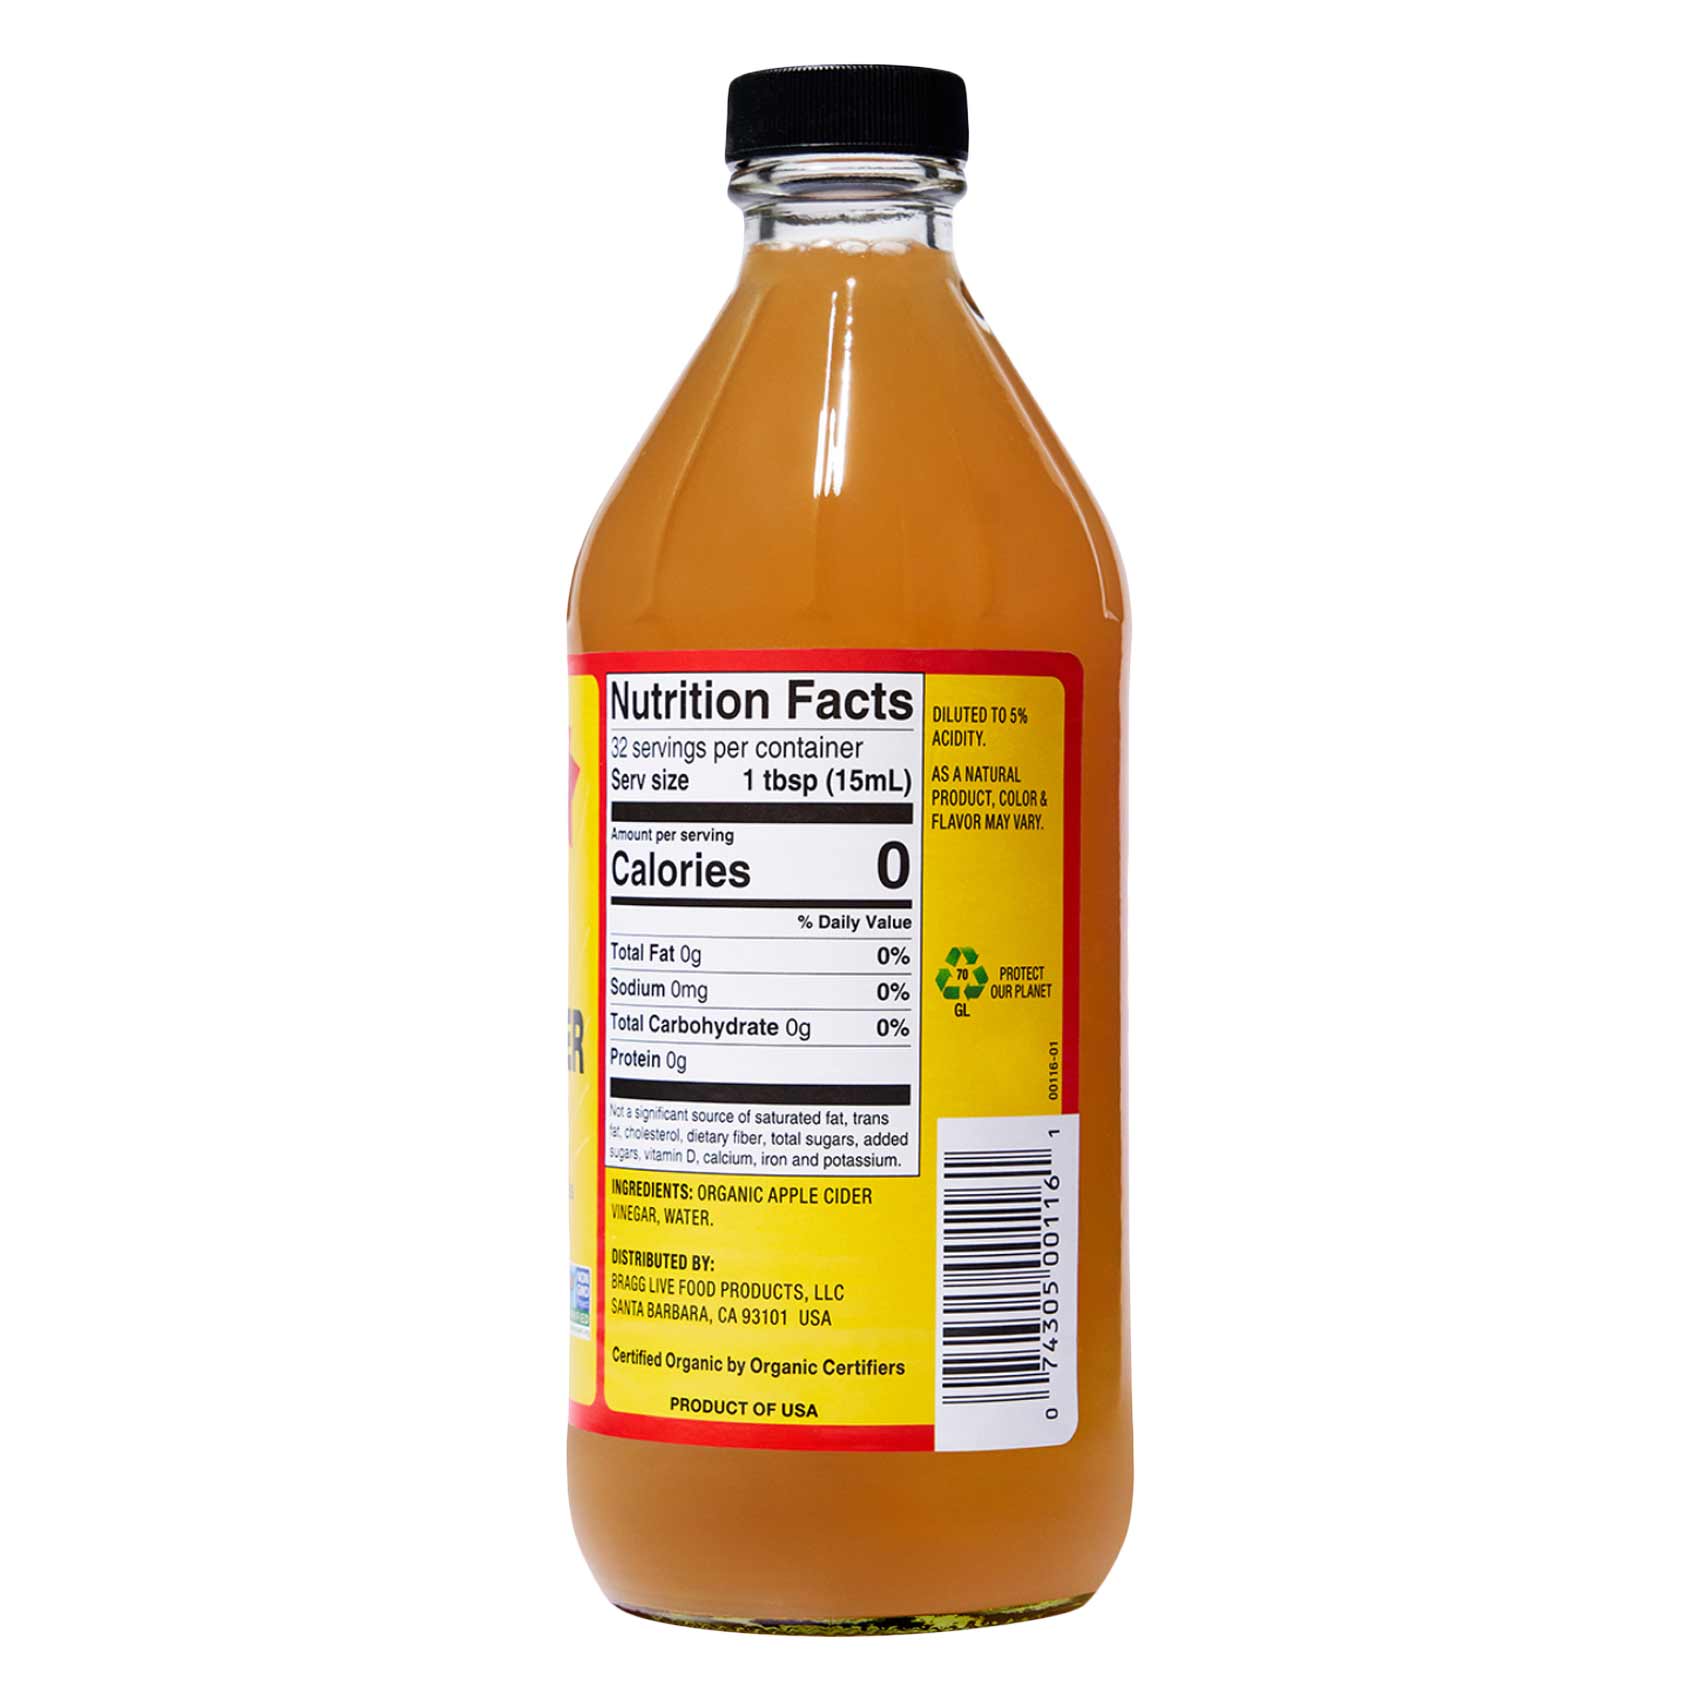 Bragg Apple Cider Vinegar 946ml